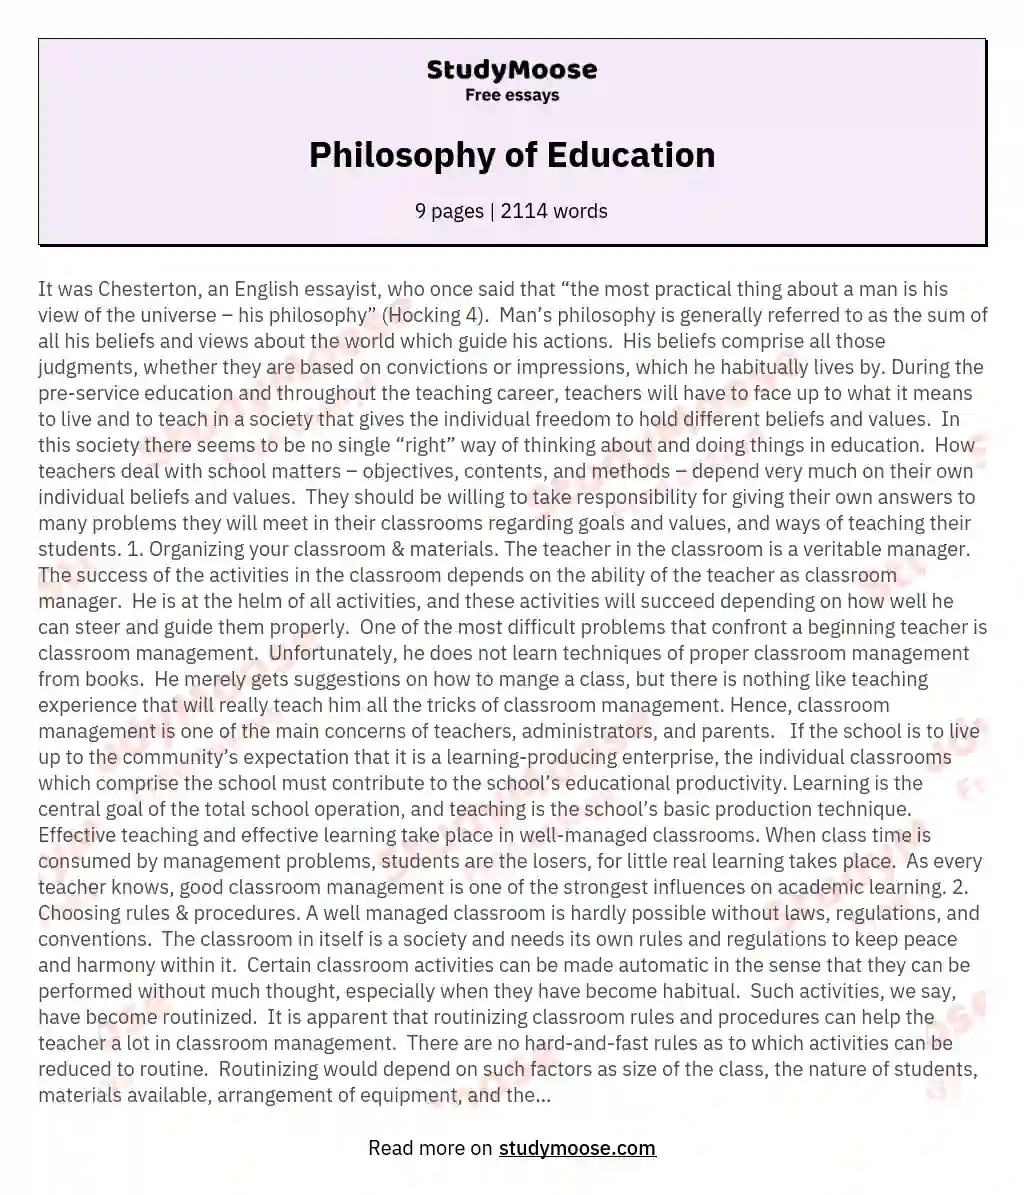 Philosophy of Education